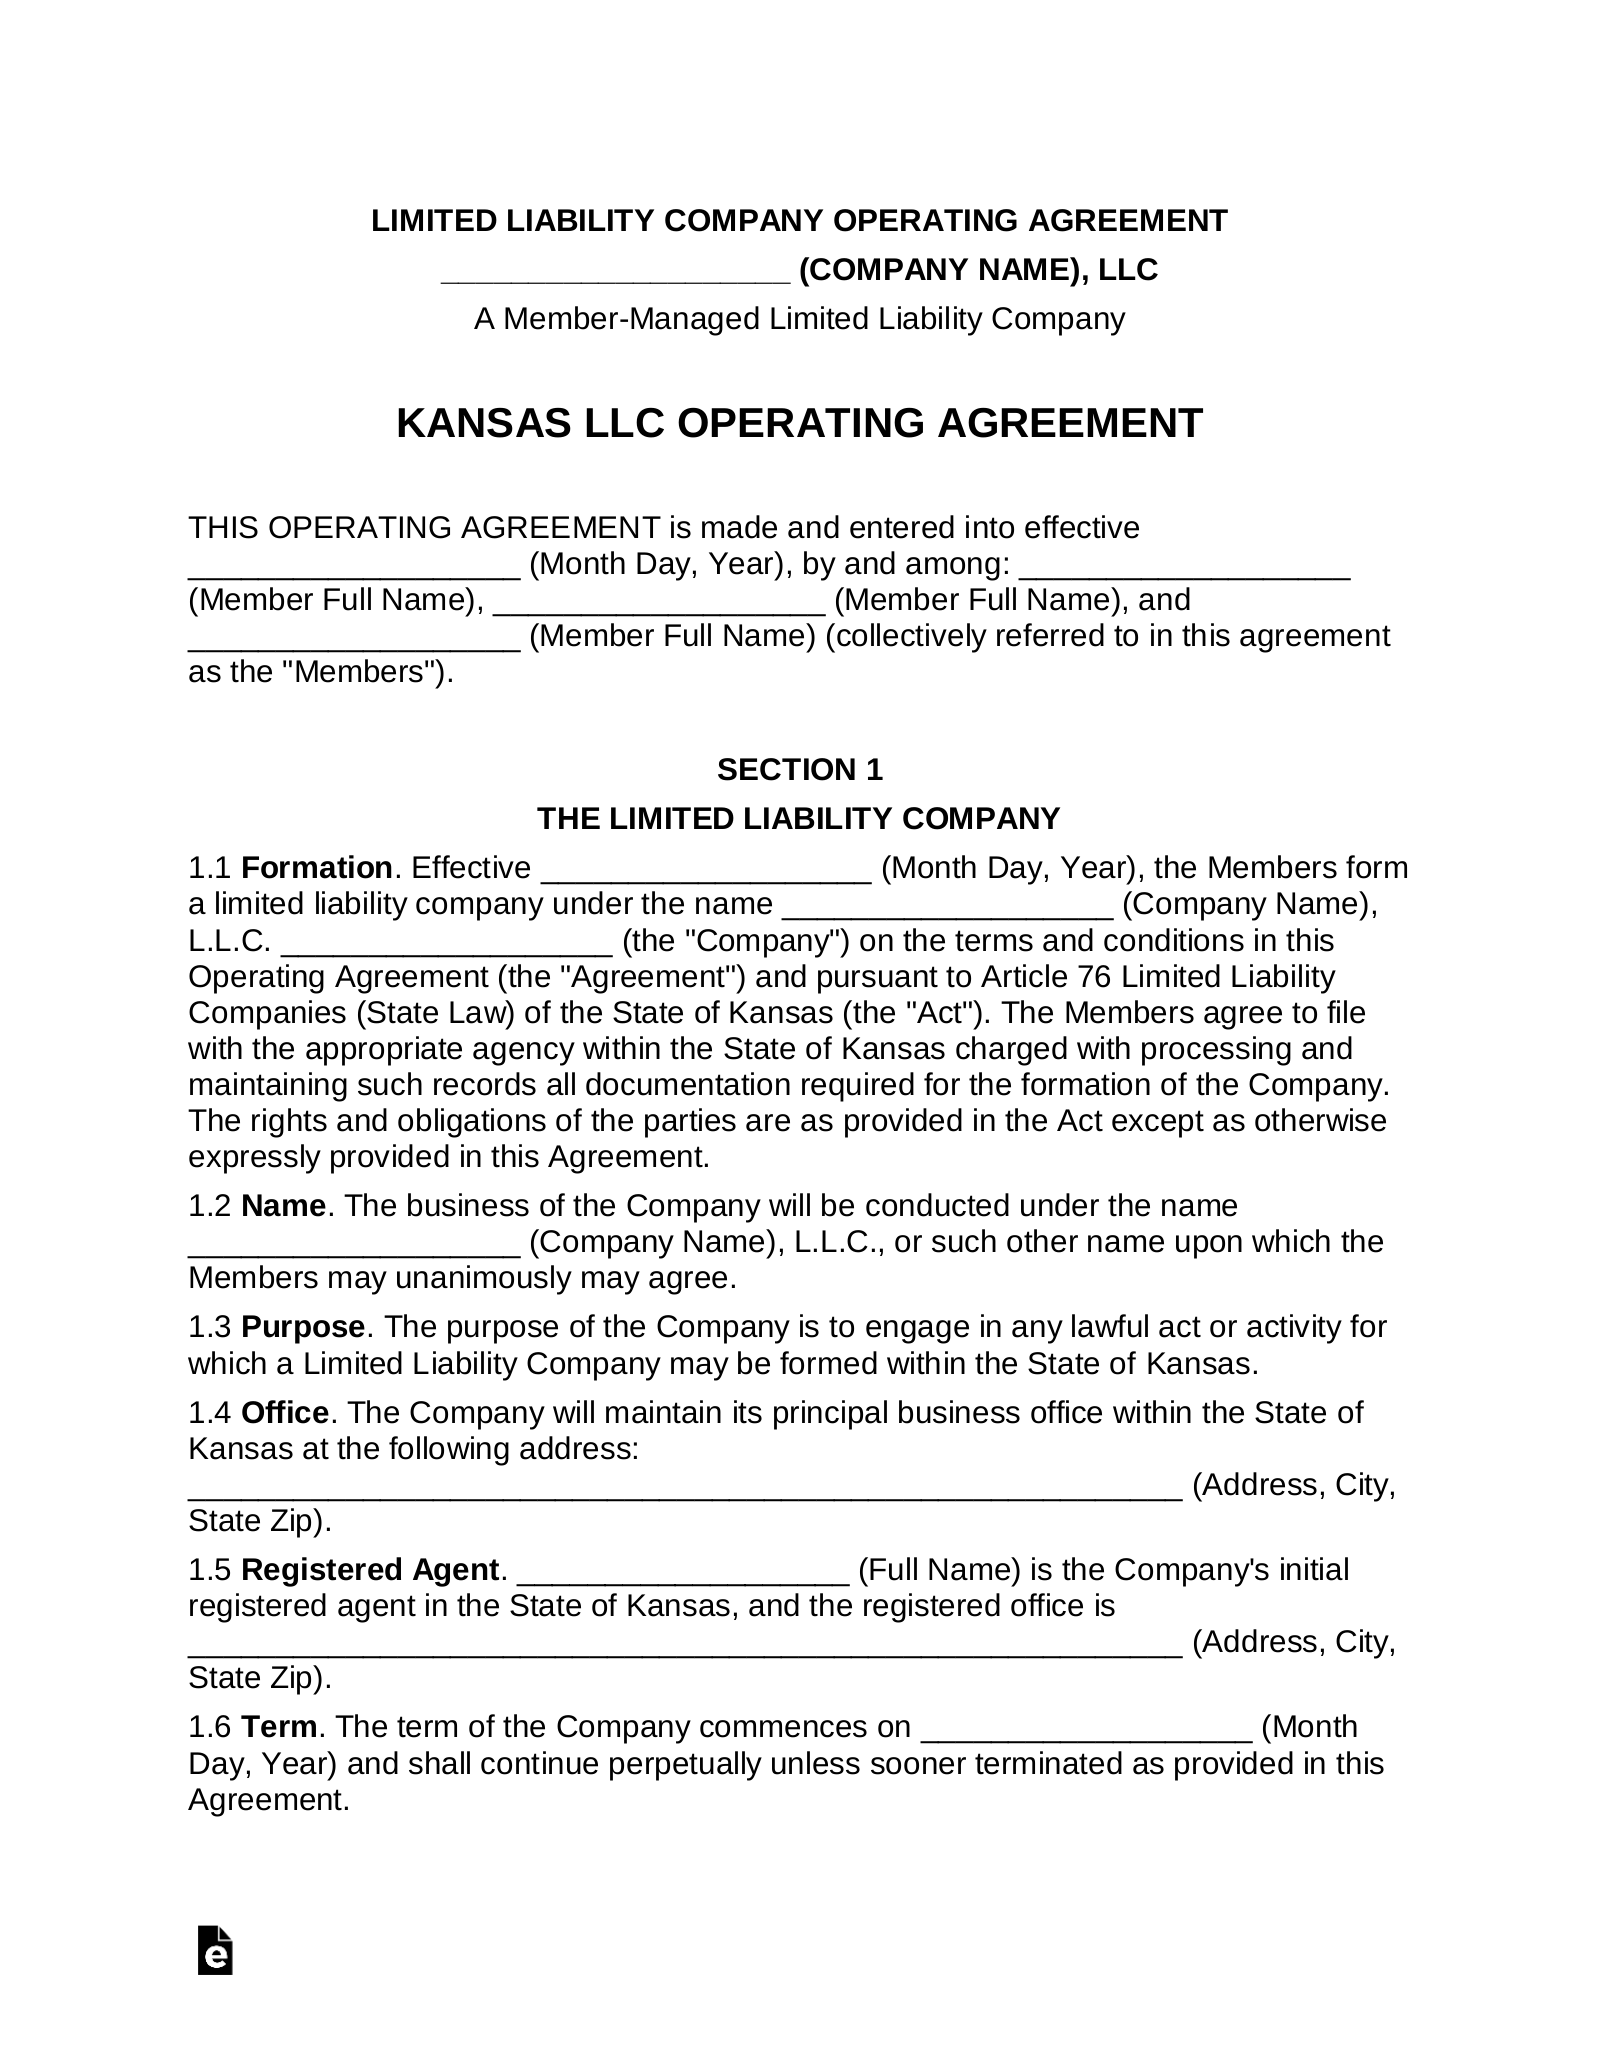 Kansas Multi-Member LLC Operating Agreement Form